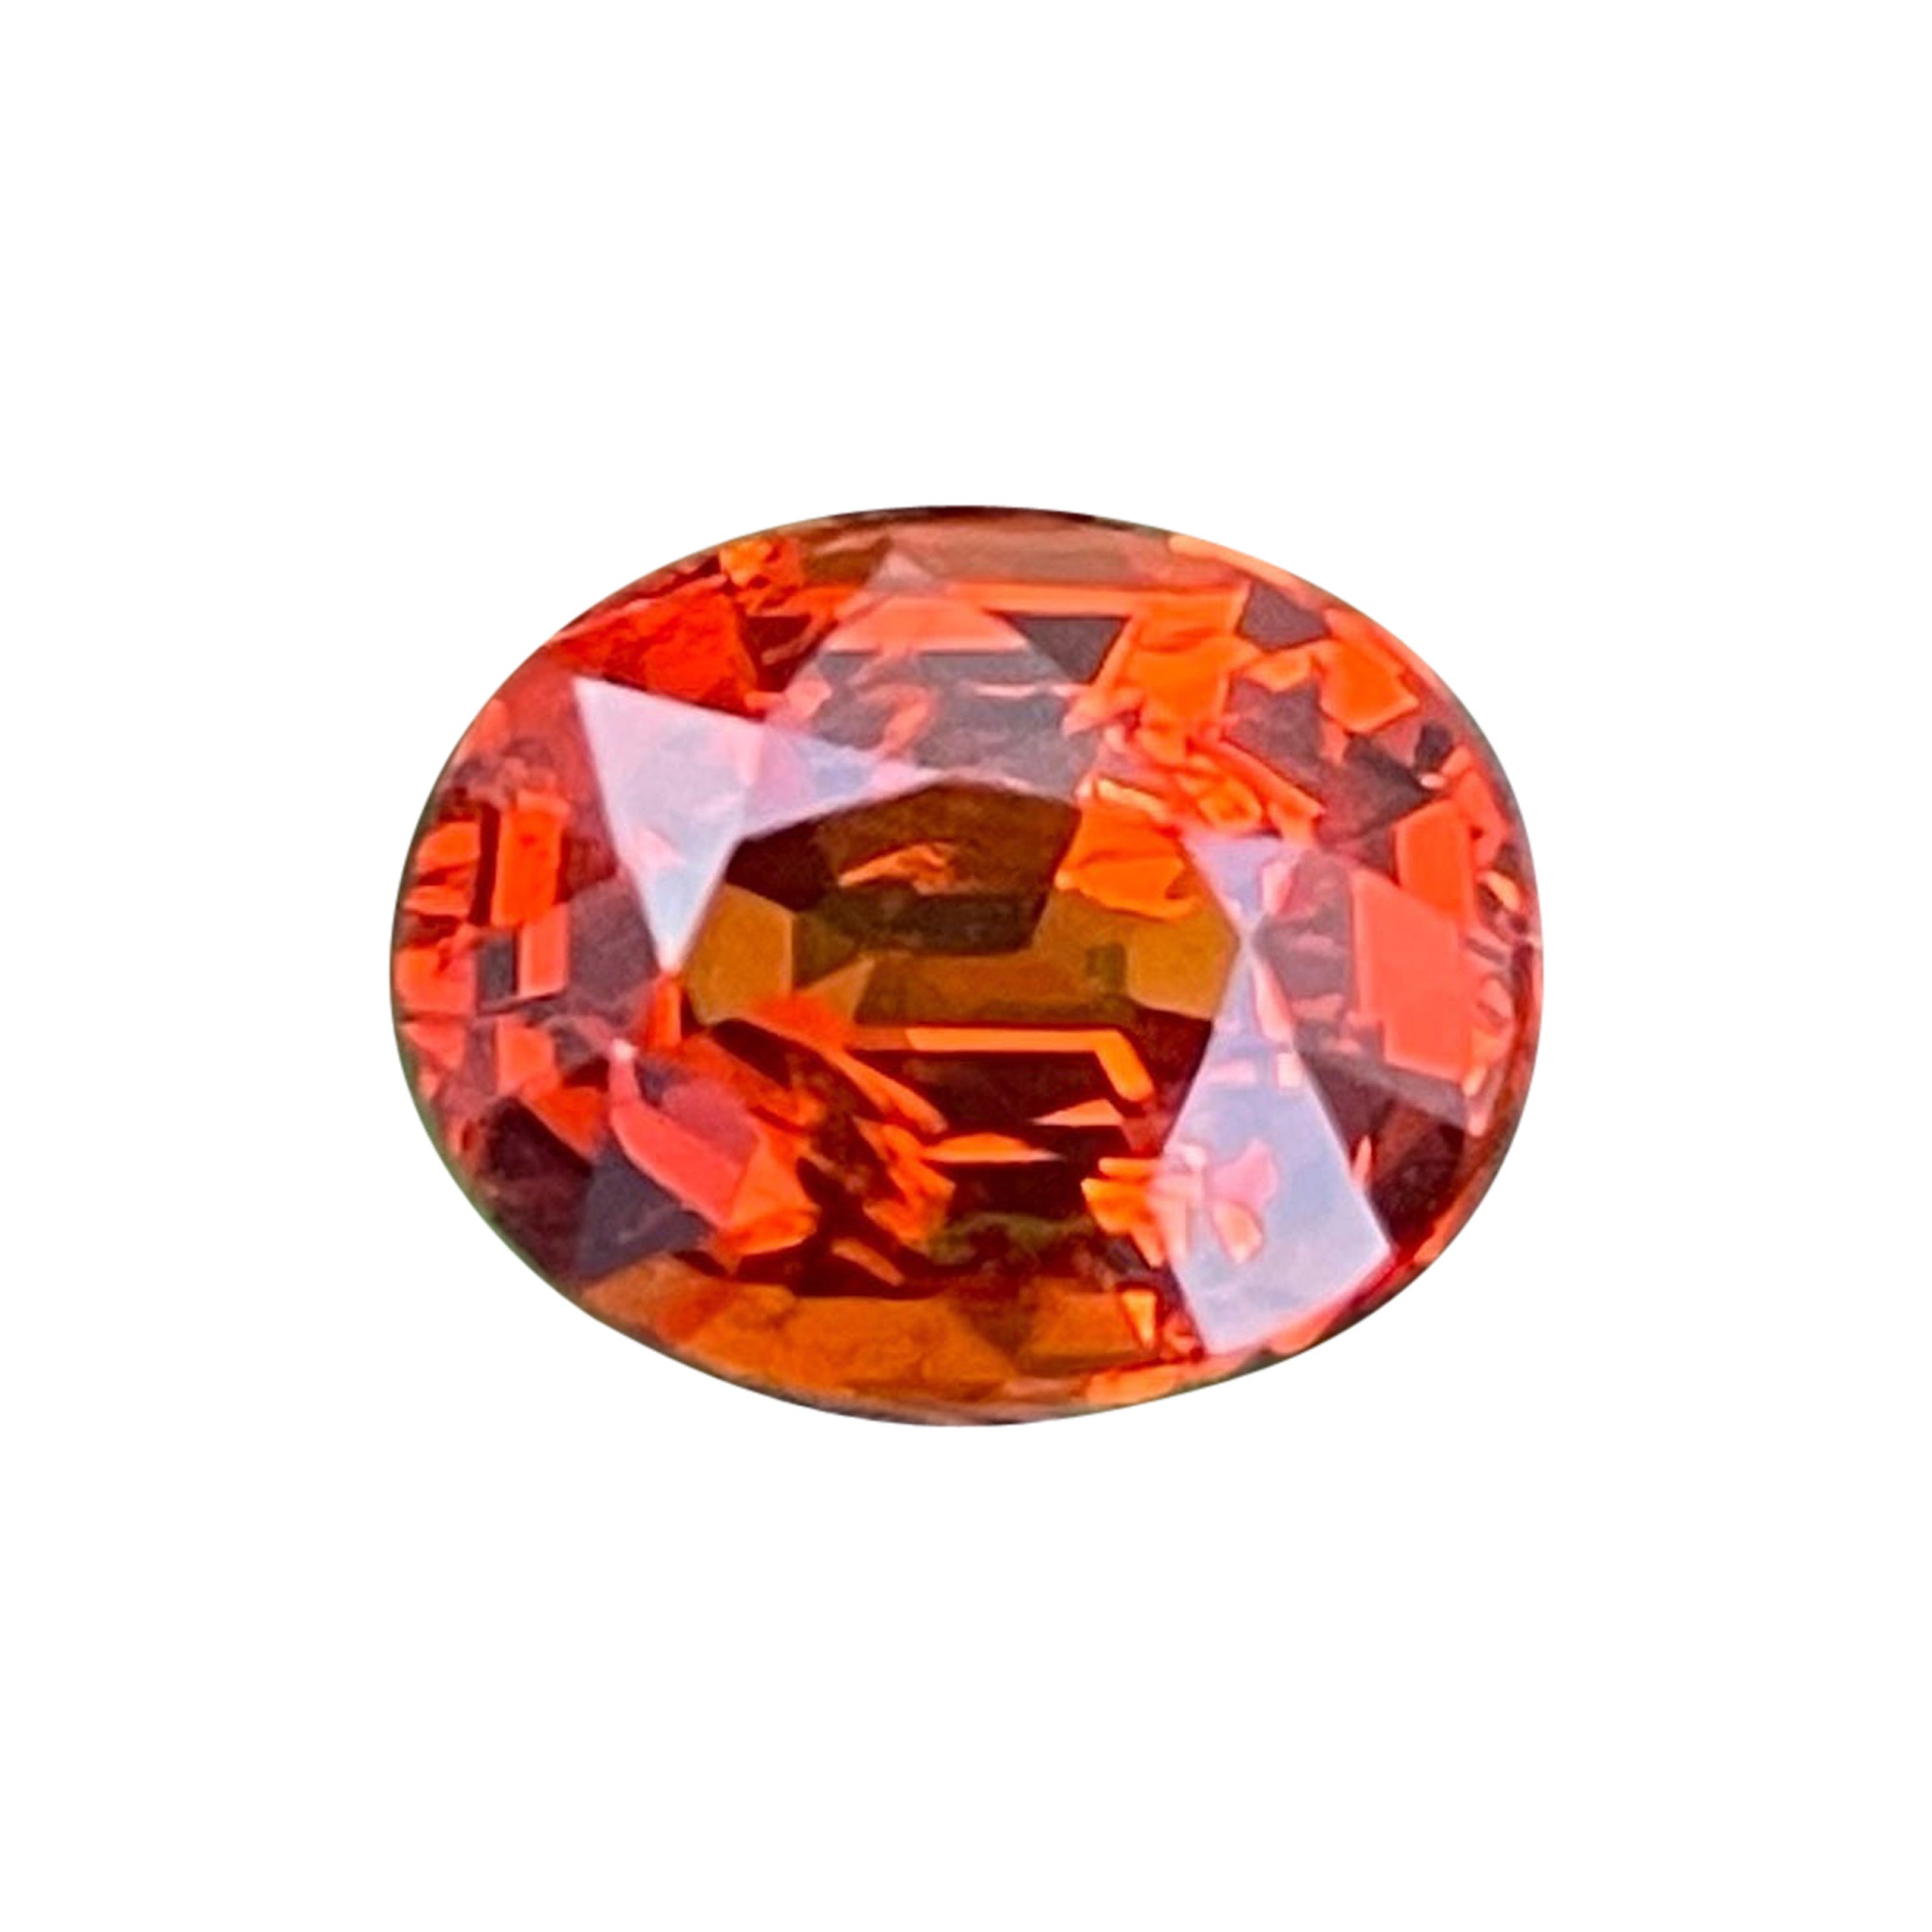 Gorgeous Fanta Spessartite Garnet Stone 2.15 Carats Garnet Gemstone for Ring